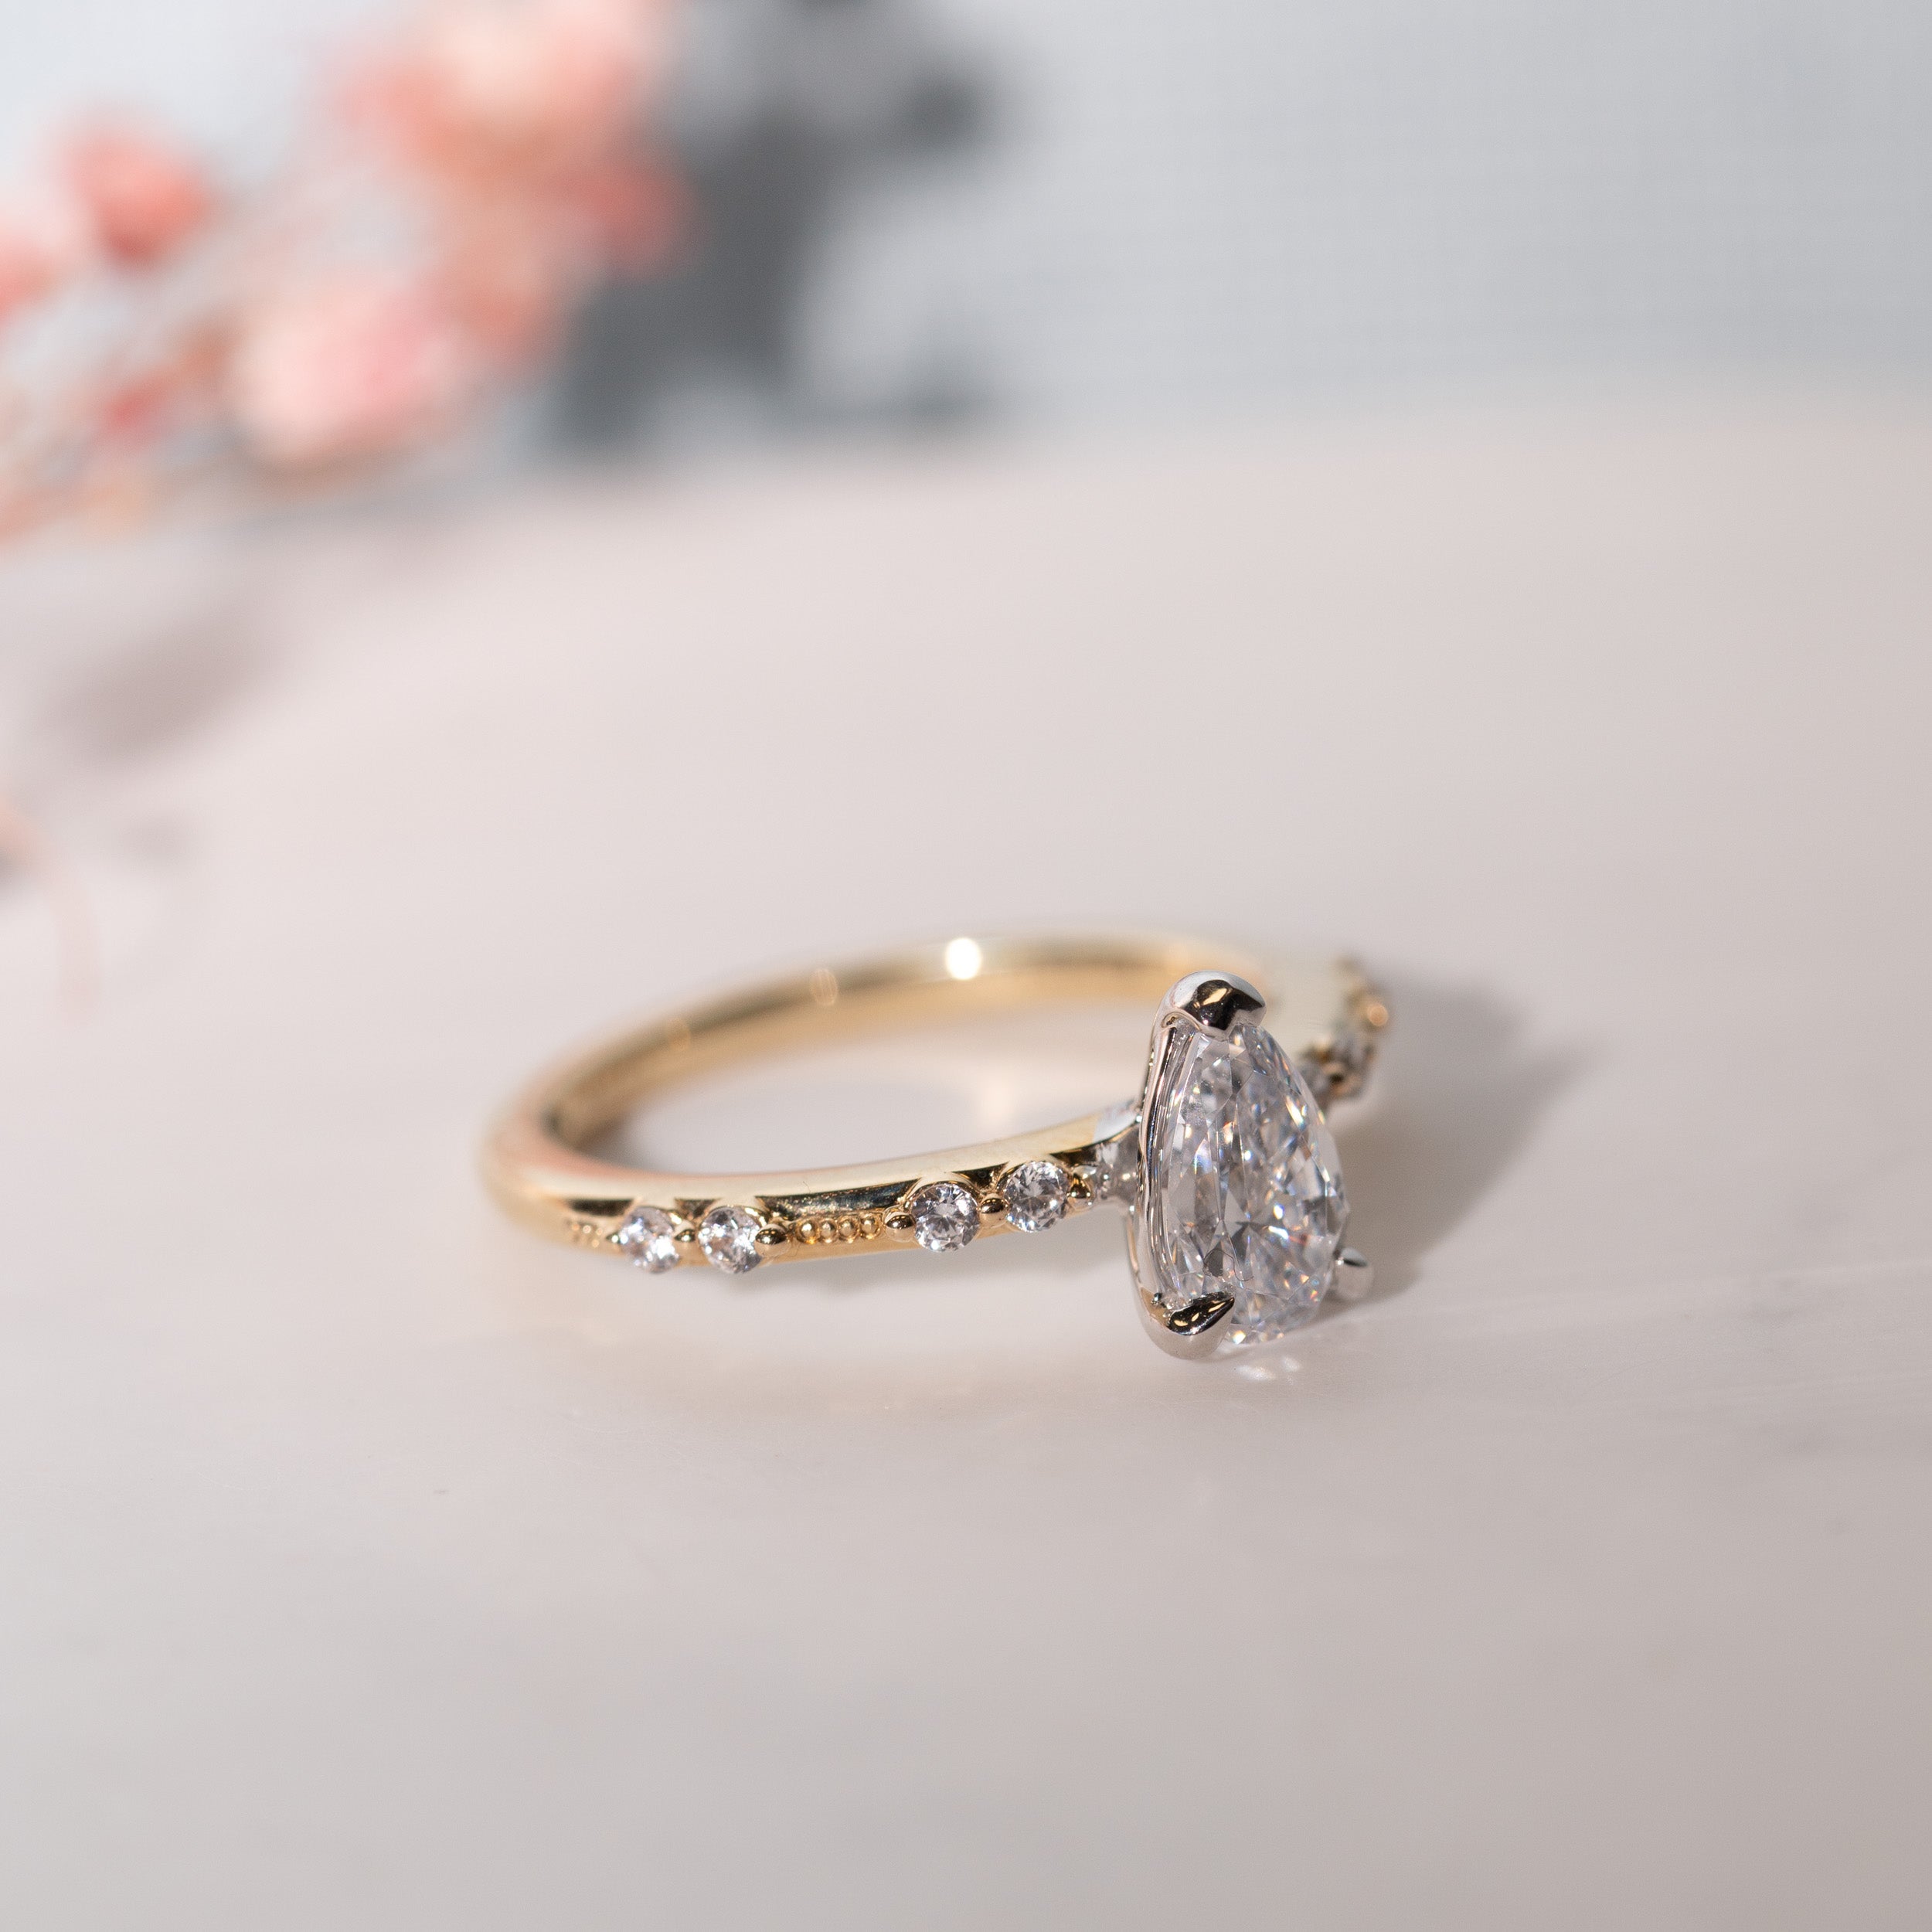 Hope Diamond | Pretty jewellery, Hope diamond, Titanic jewelry